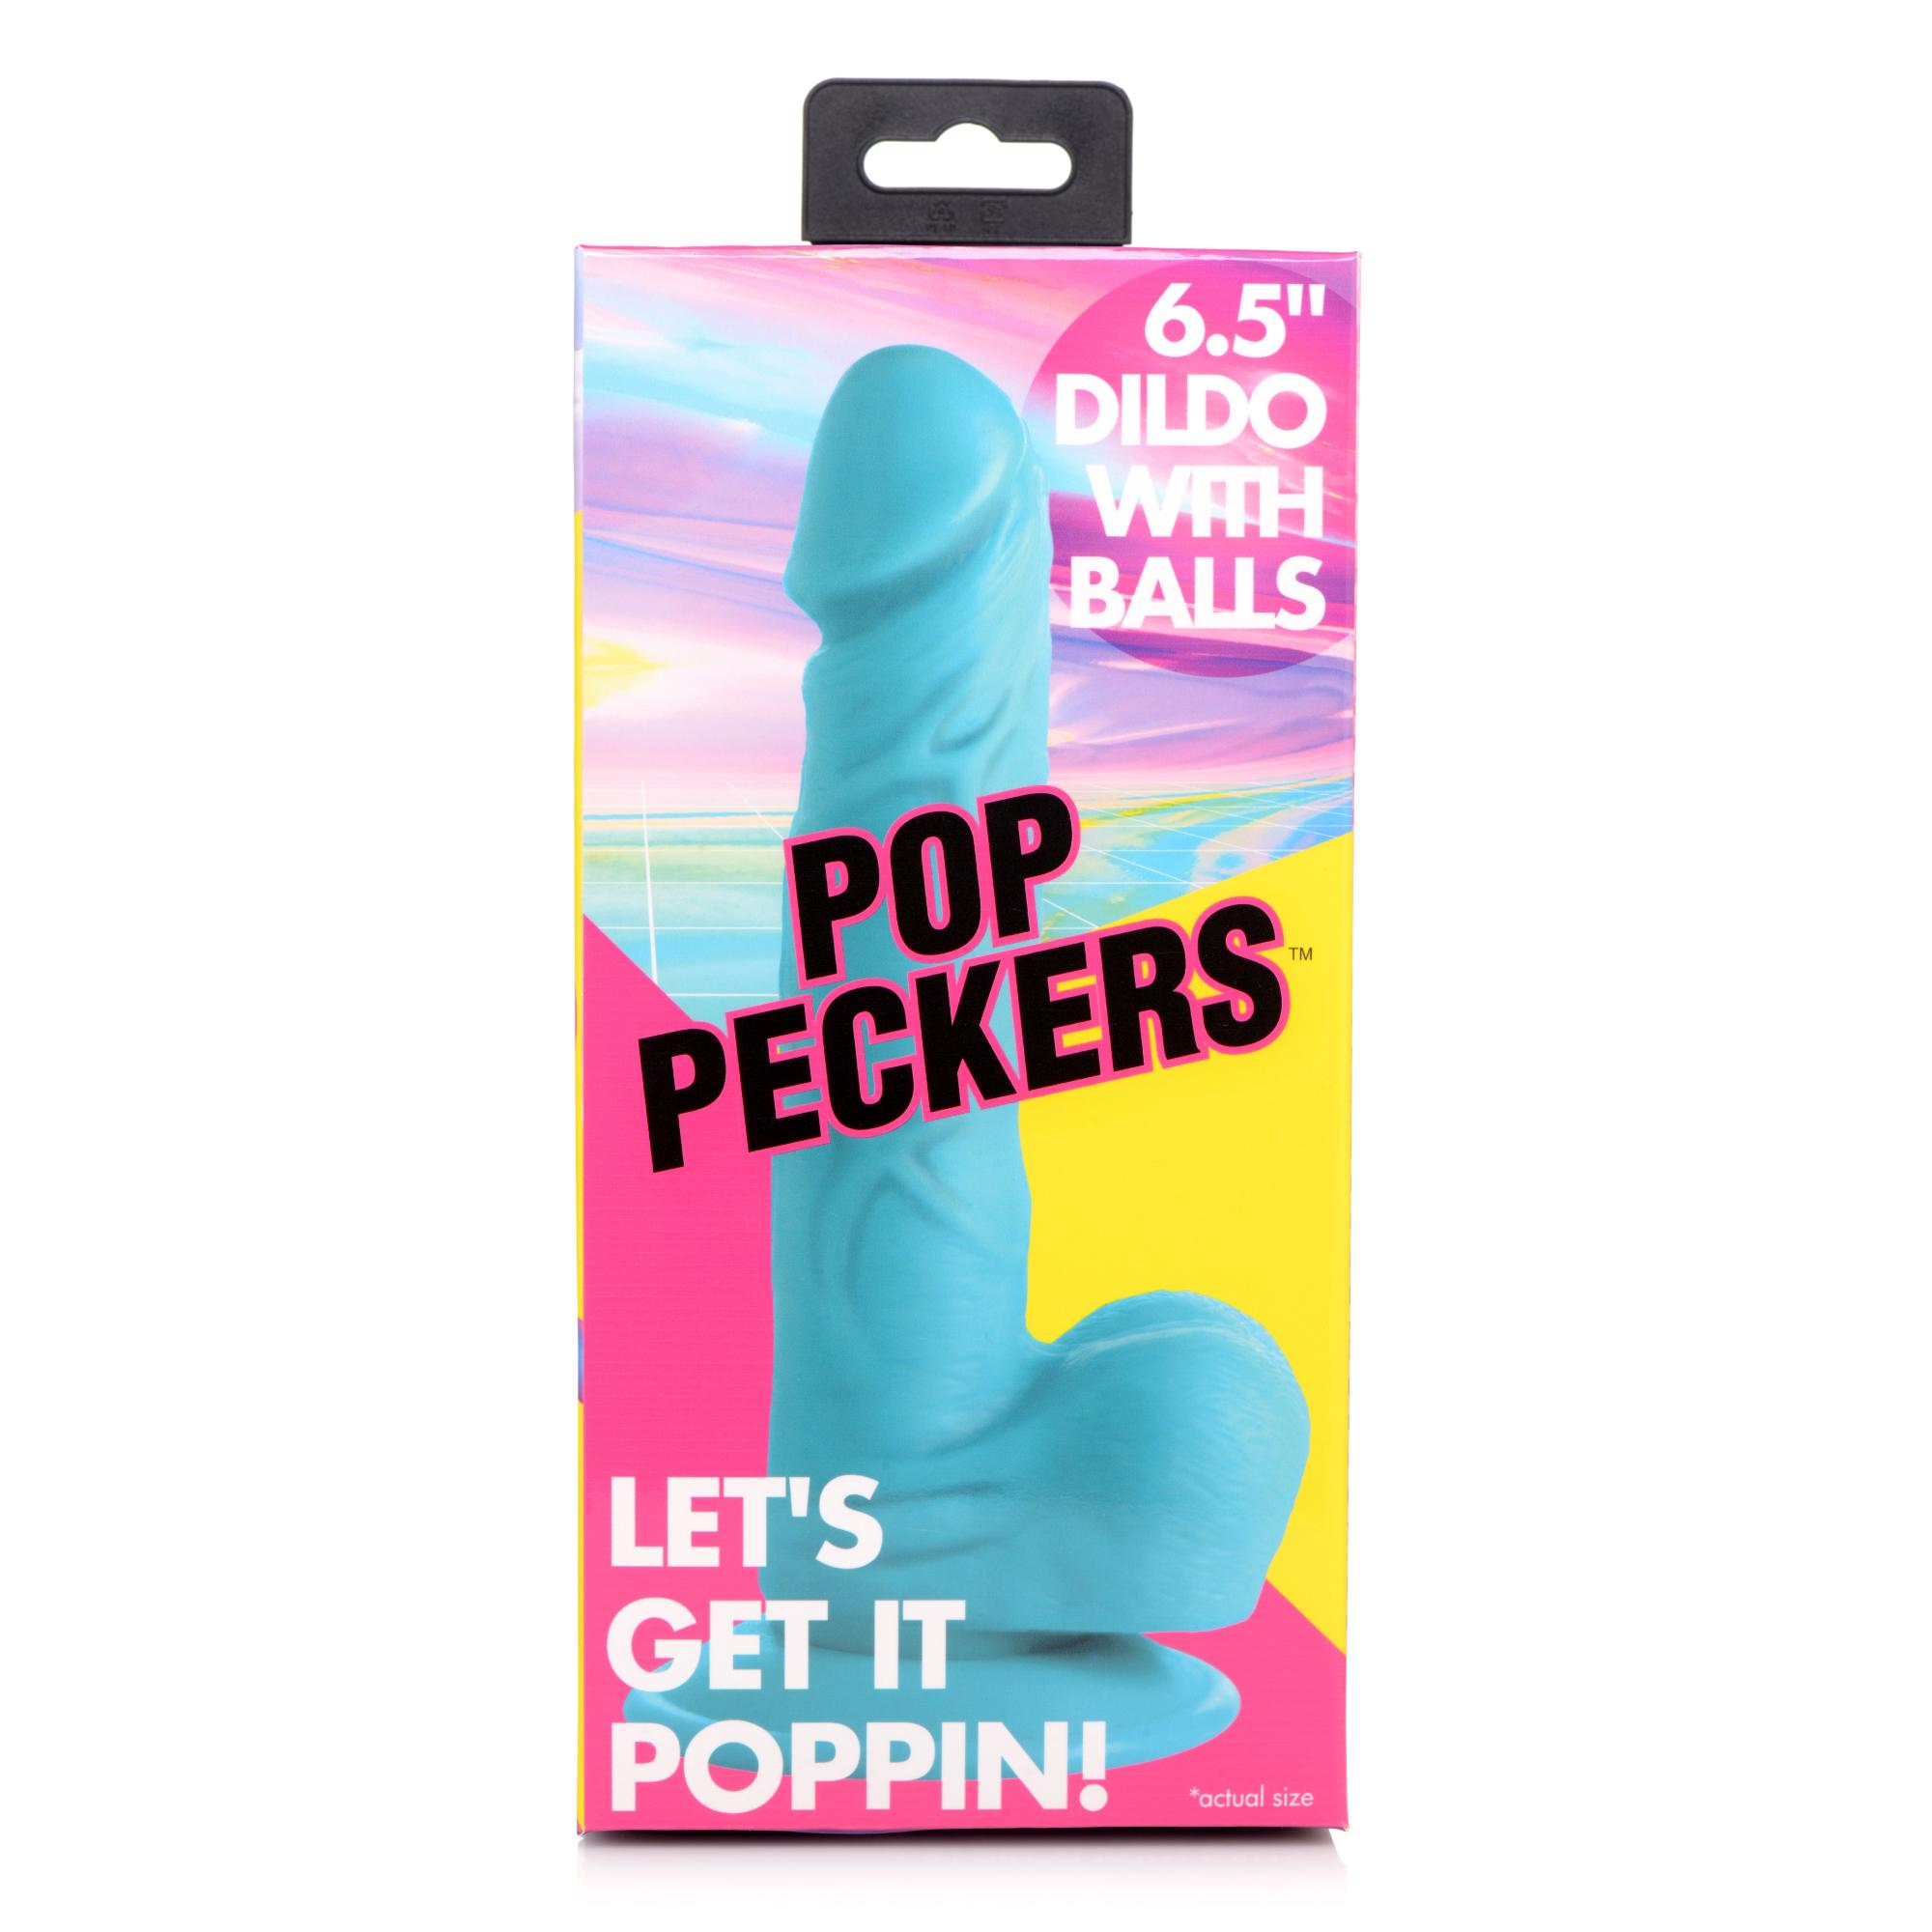 Pop Peckers 6.5" Dildo with Balls